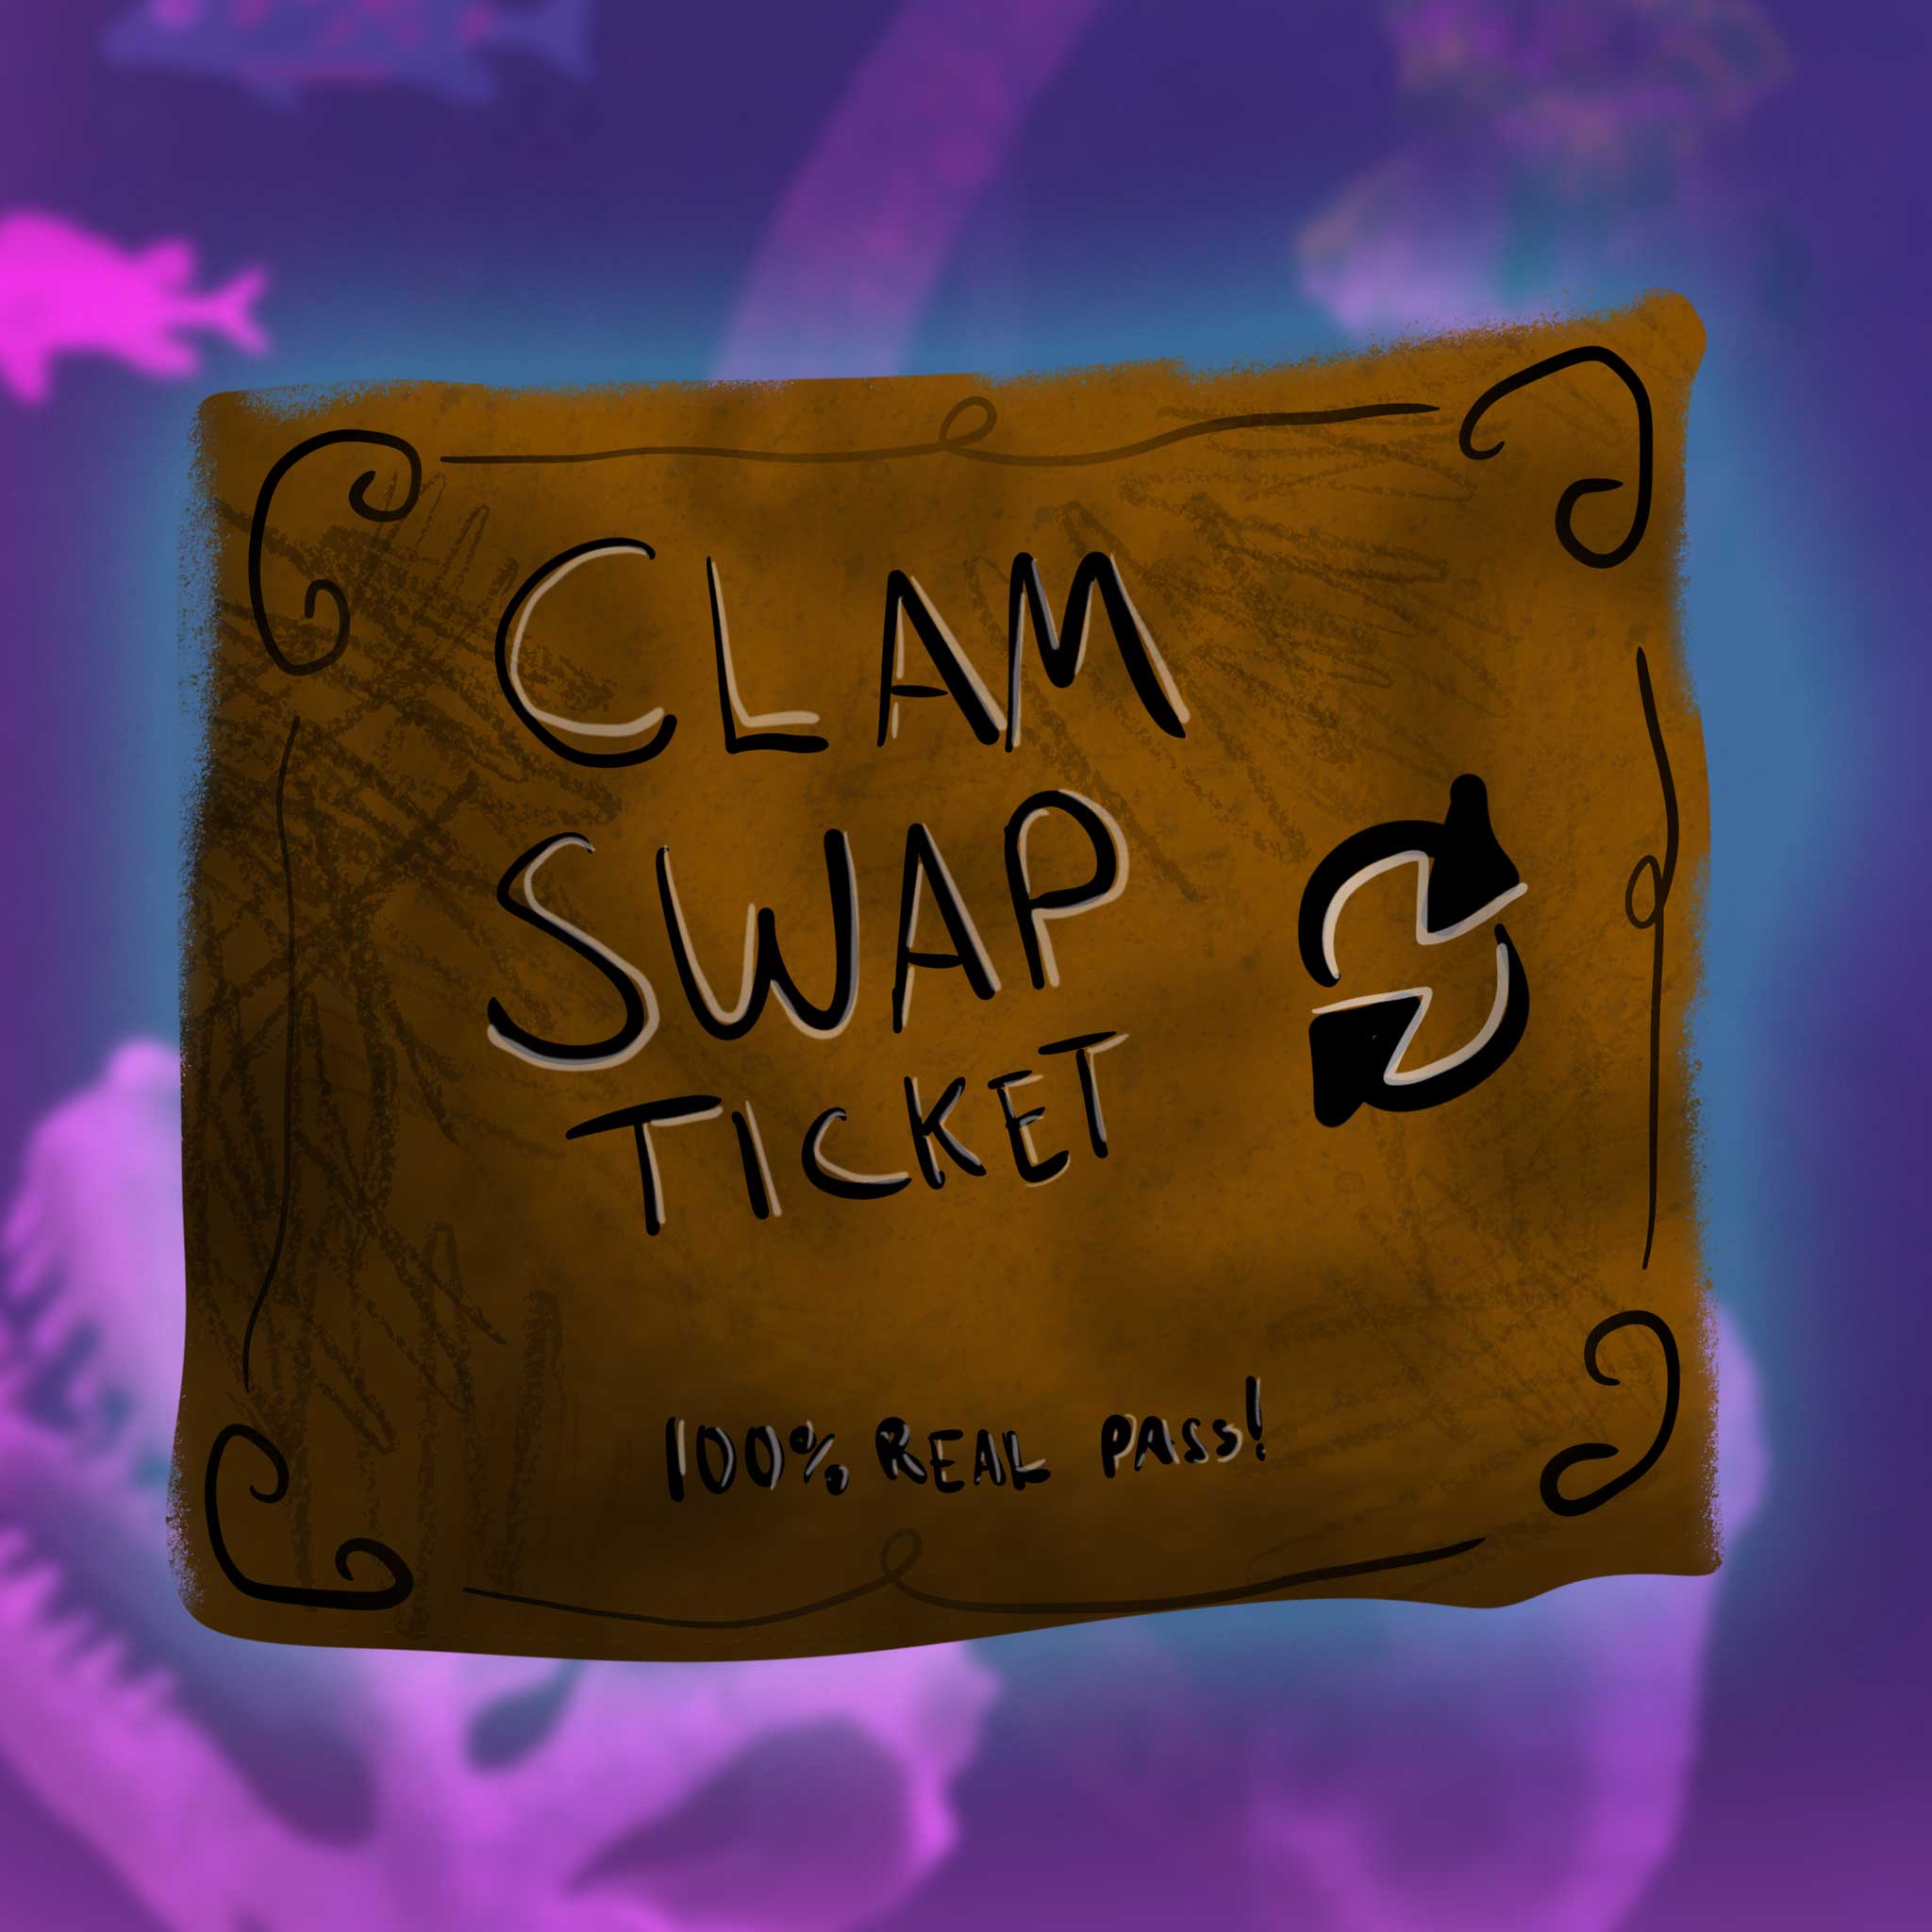 The Clam Swap Pass